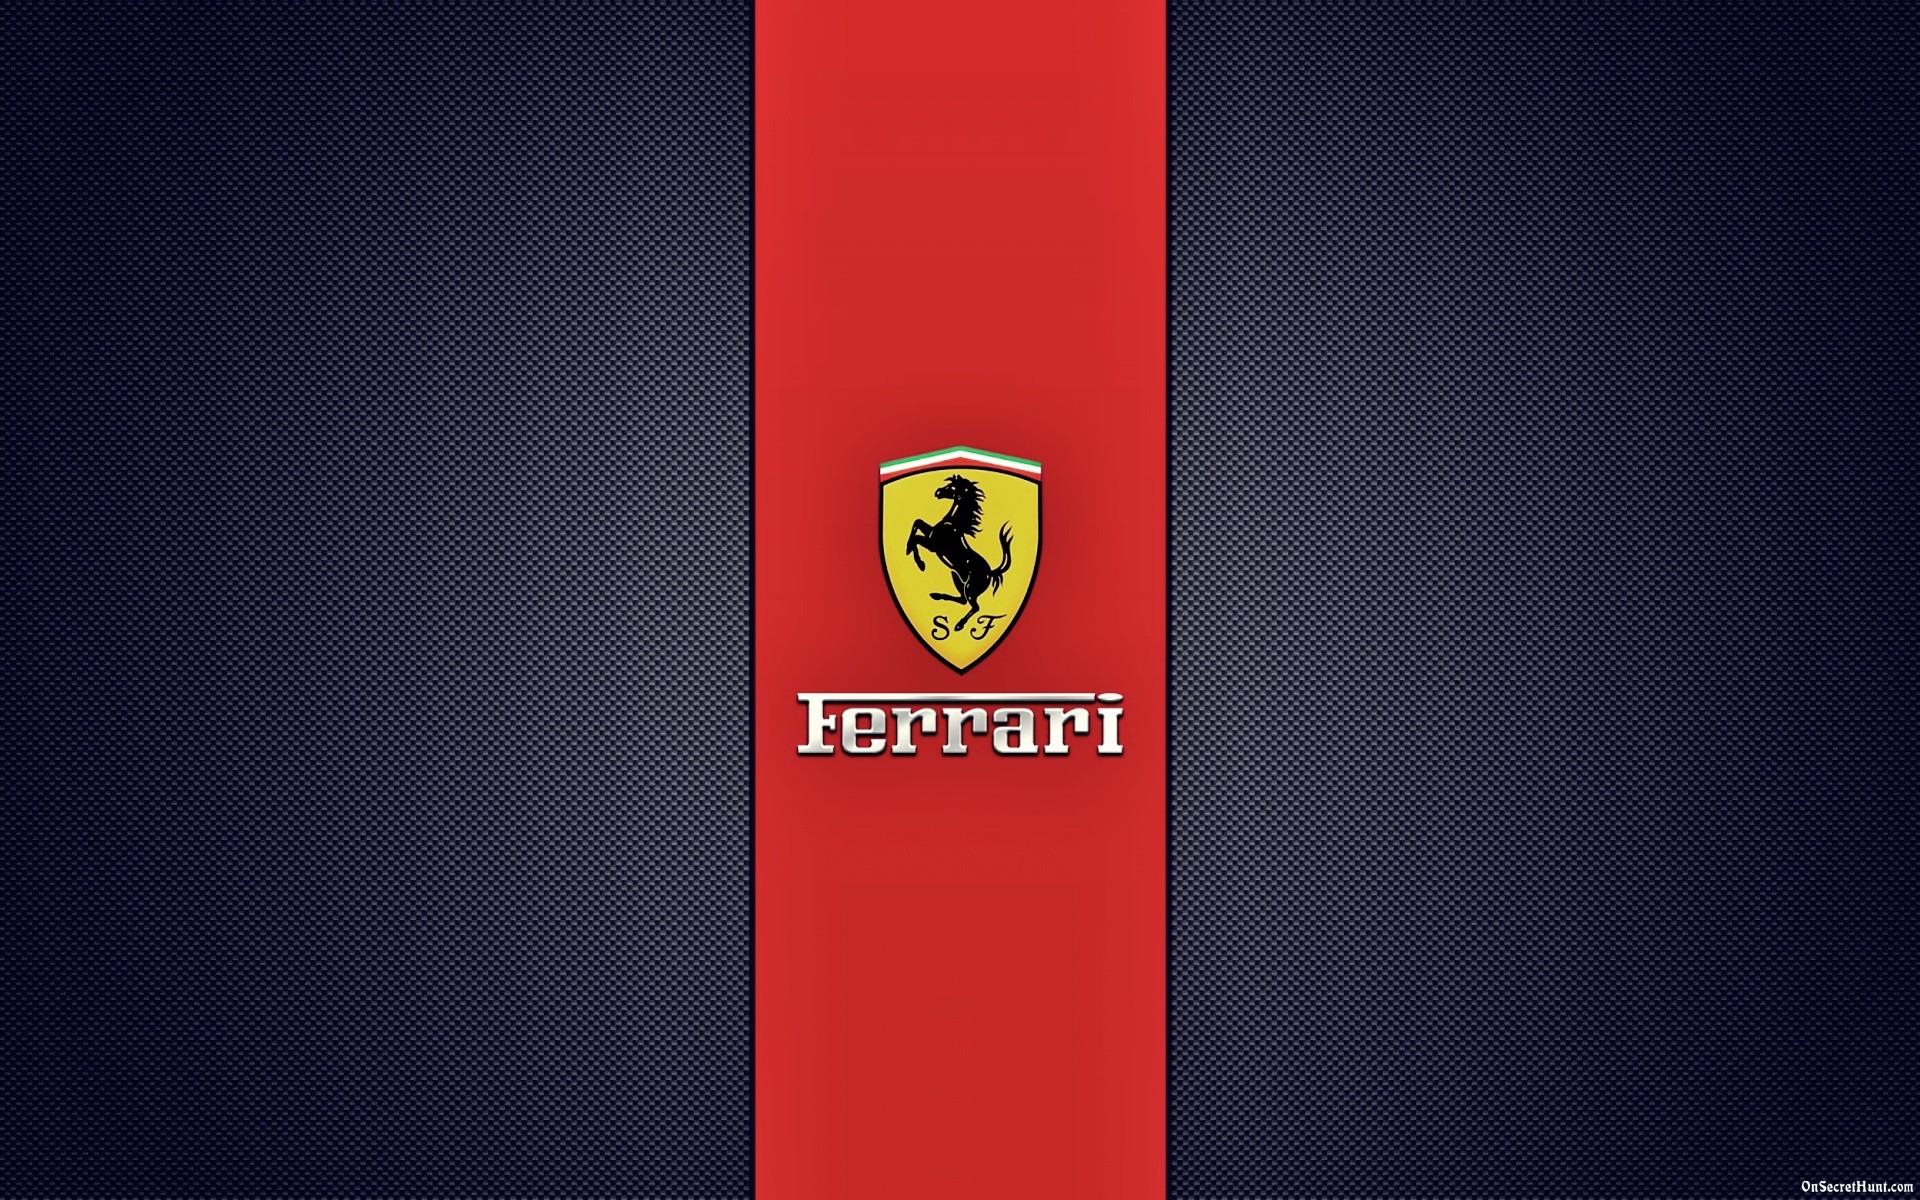 1920x1200 Ferrari logo Wallpapers Pictures | Wallpapers 4k | Pinterest | Ferrari logo  and Wallpaper